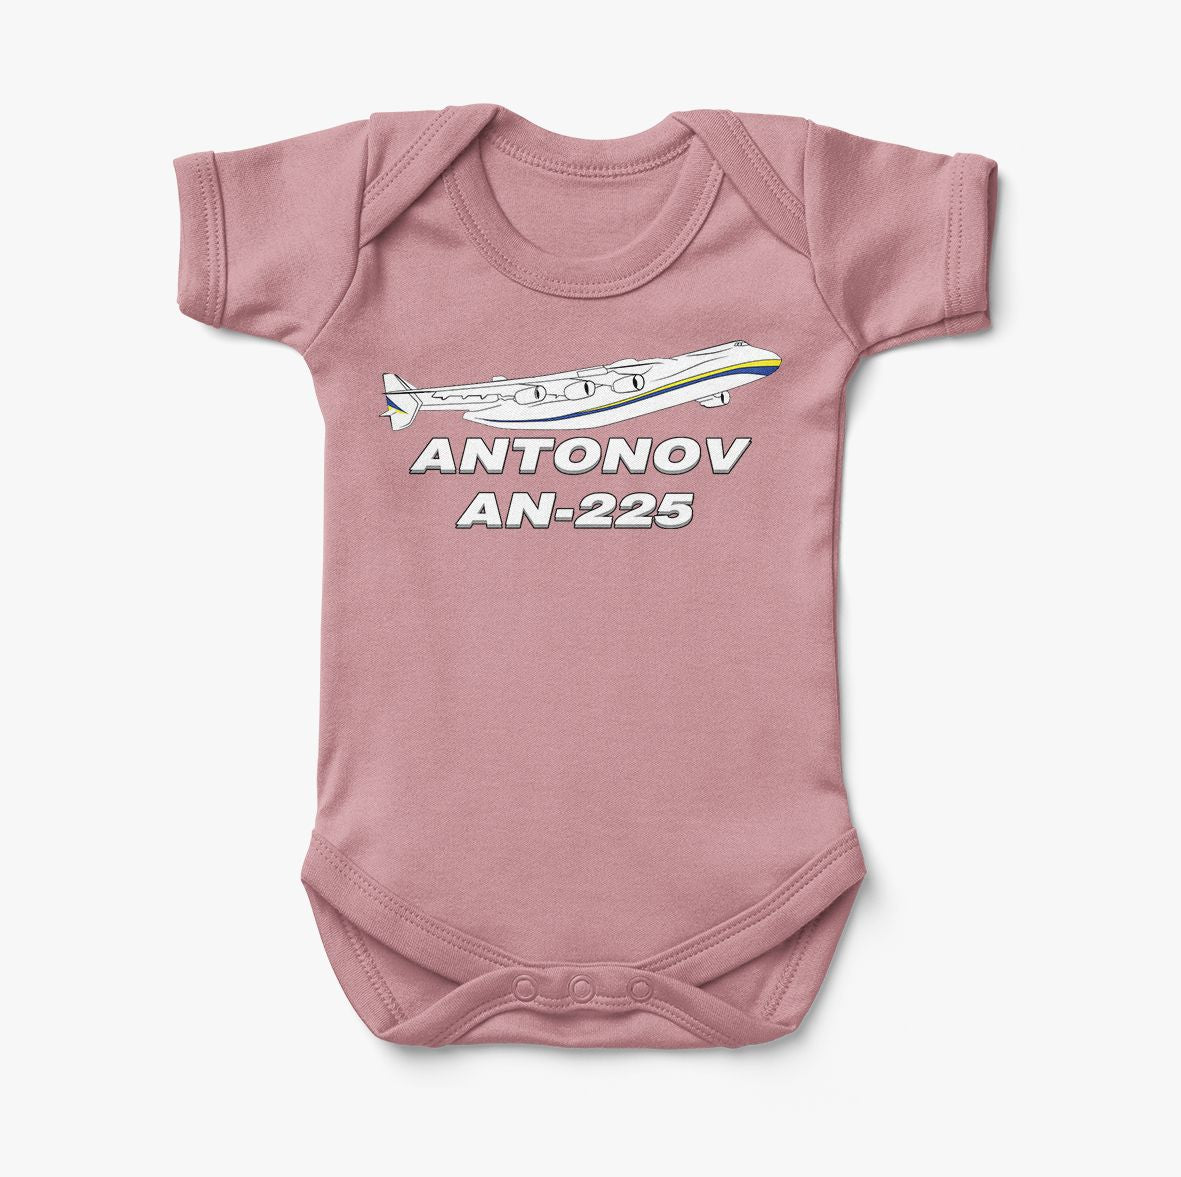 Antonov AN-225 (27) Designed Baby Bodysuits